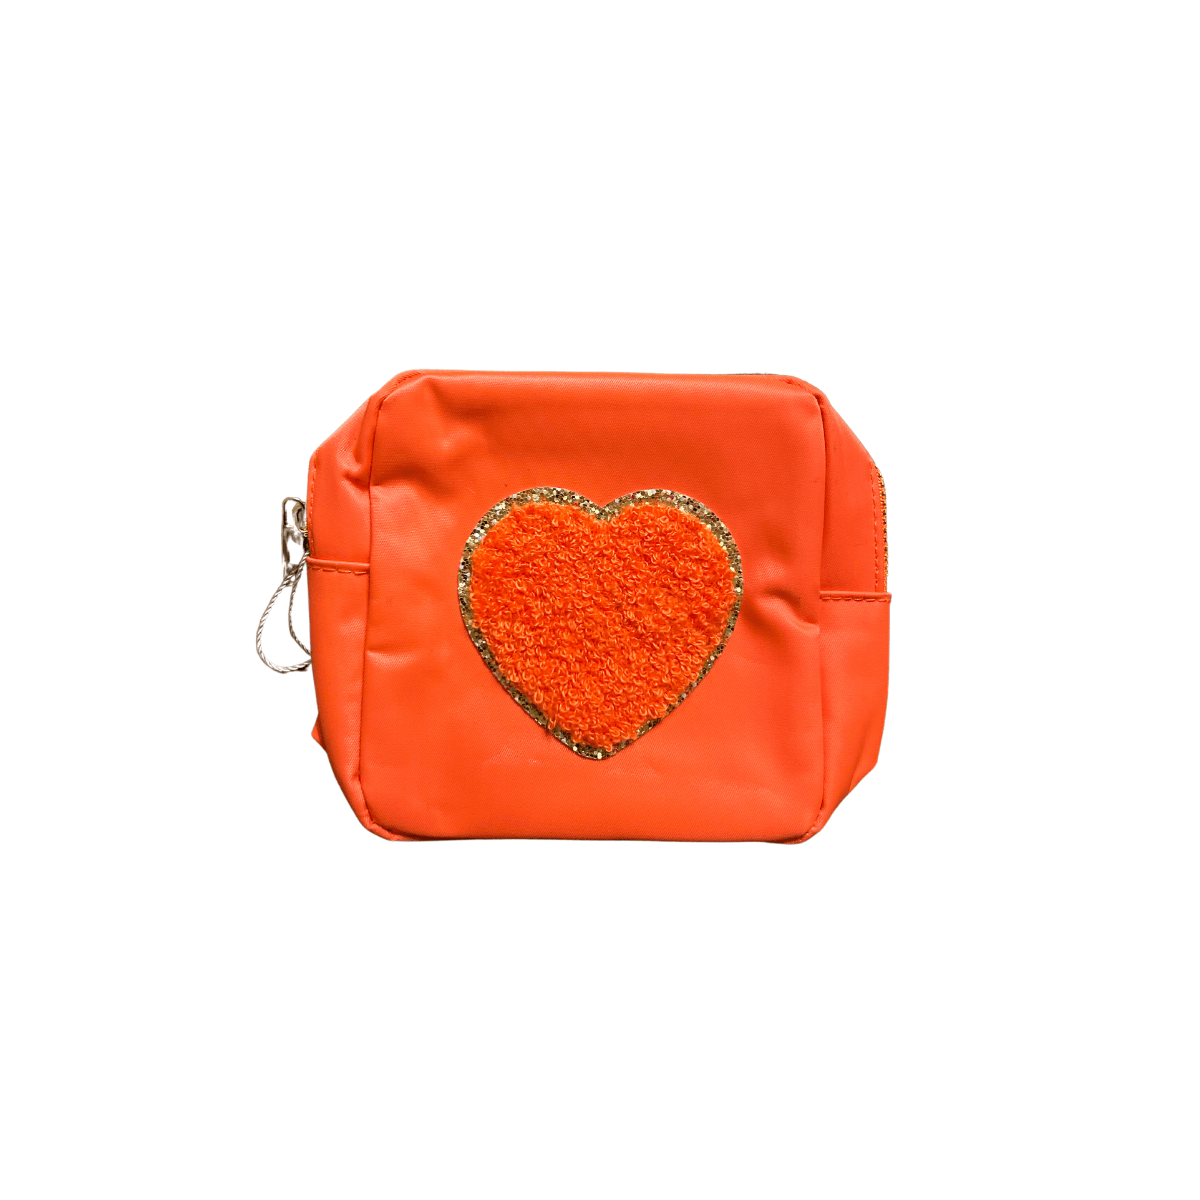 Mini Bag with Heart - Fairley Fancy 